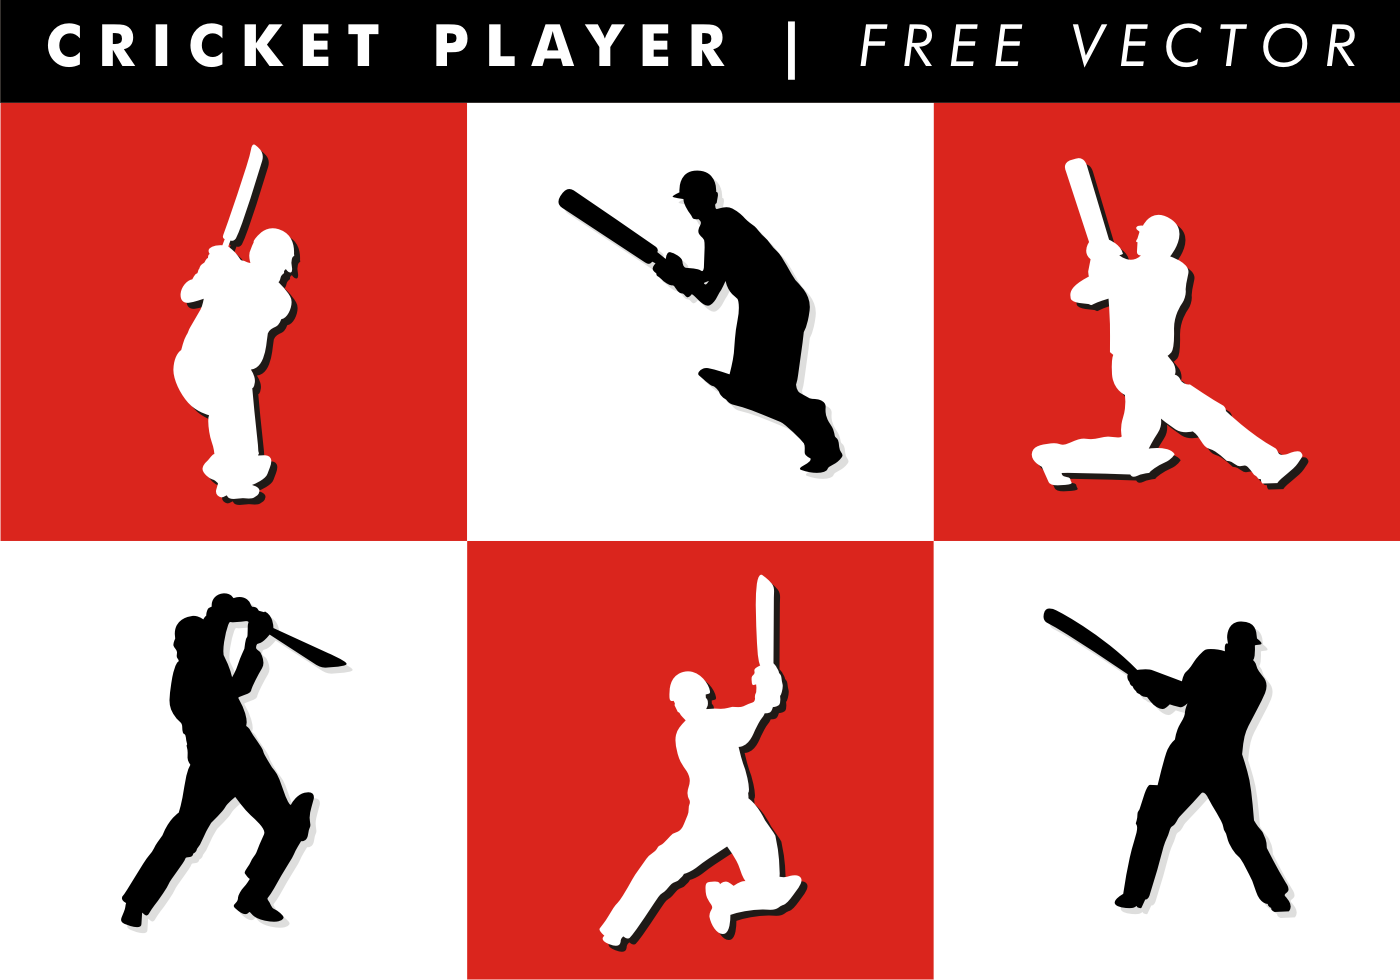 Cricket Player Free Vector - Download Free Vector Art ...